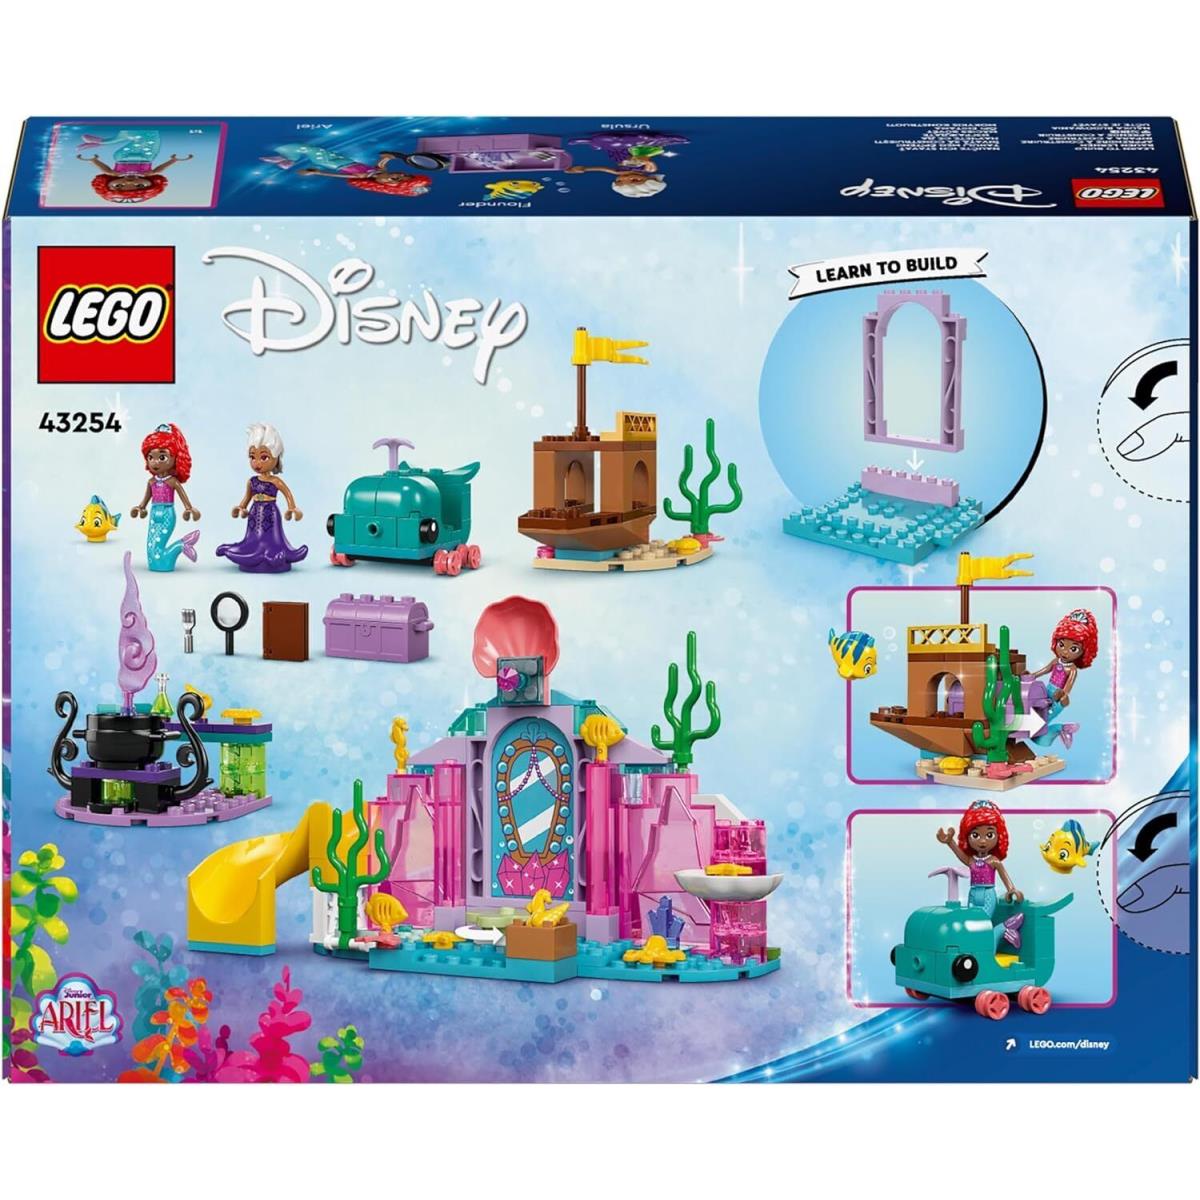 Lego Disney Princess Ariel s Crystal Cavern Buildable Toy Playset For Kids Li